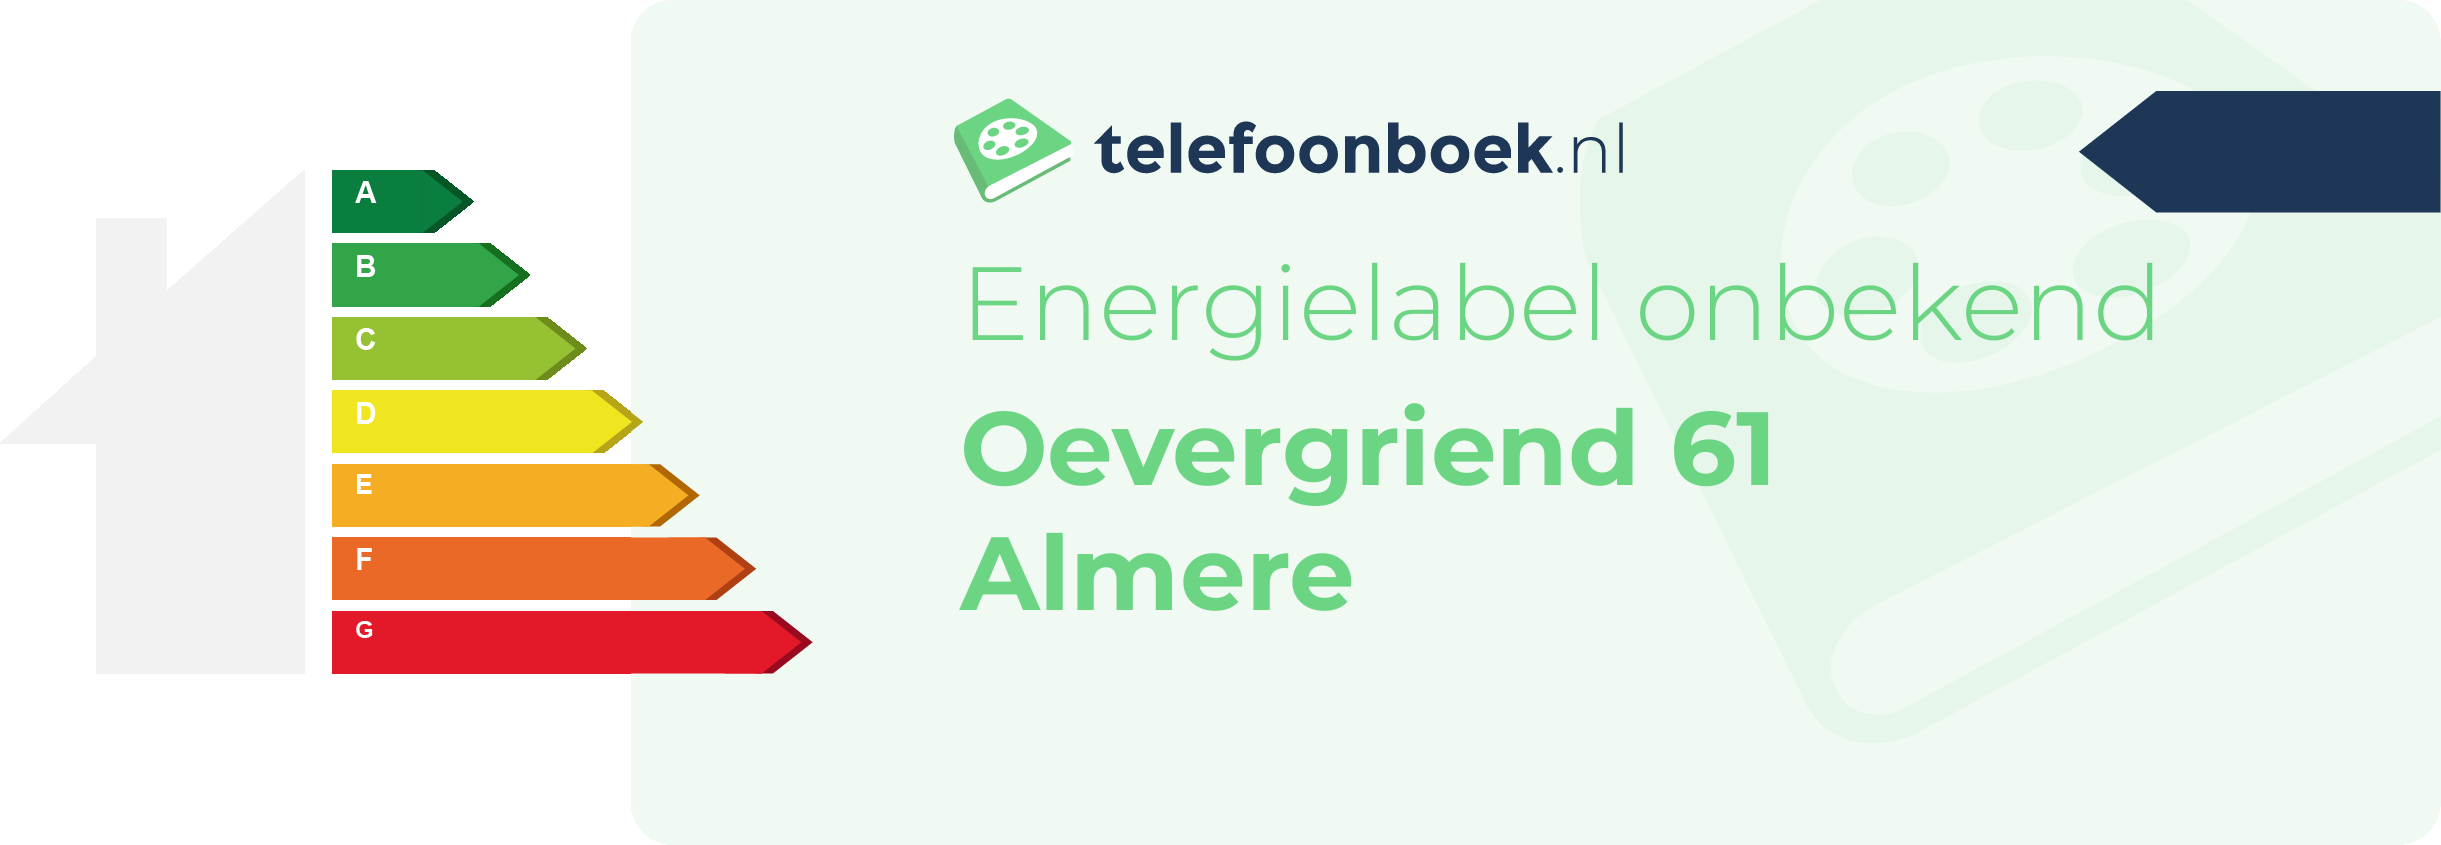 Energielabel Oevergriend 61 Almere